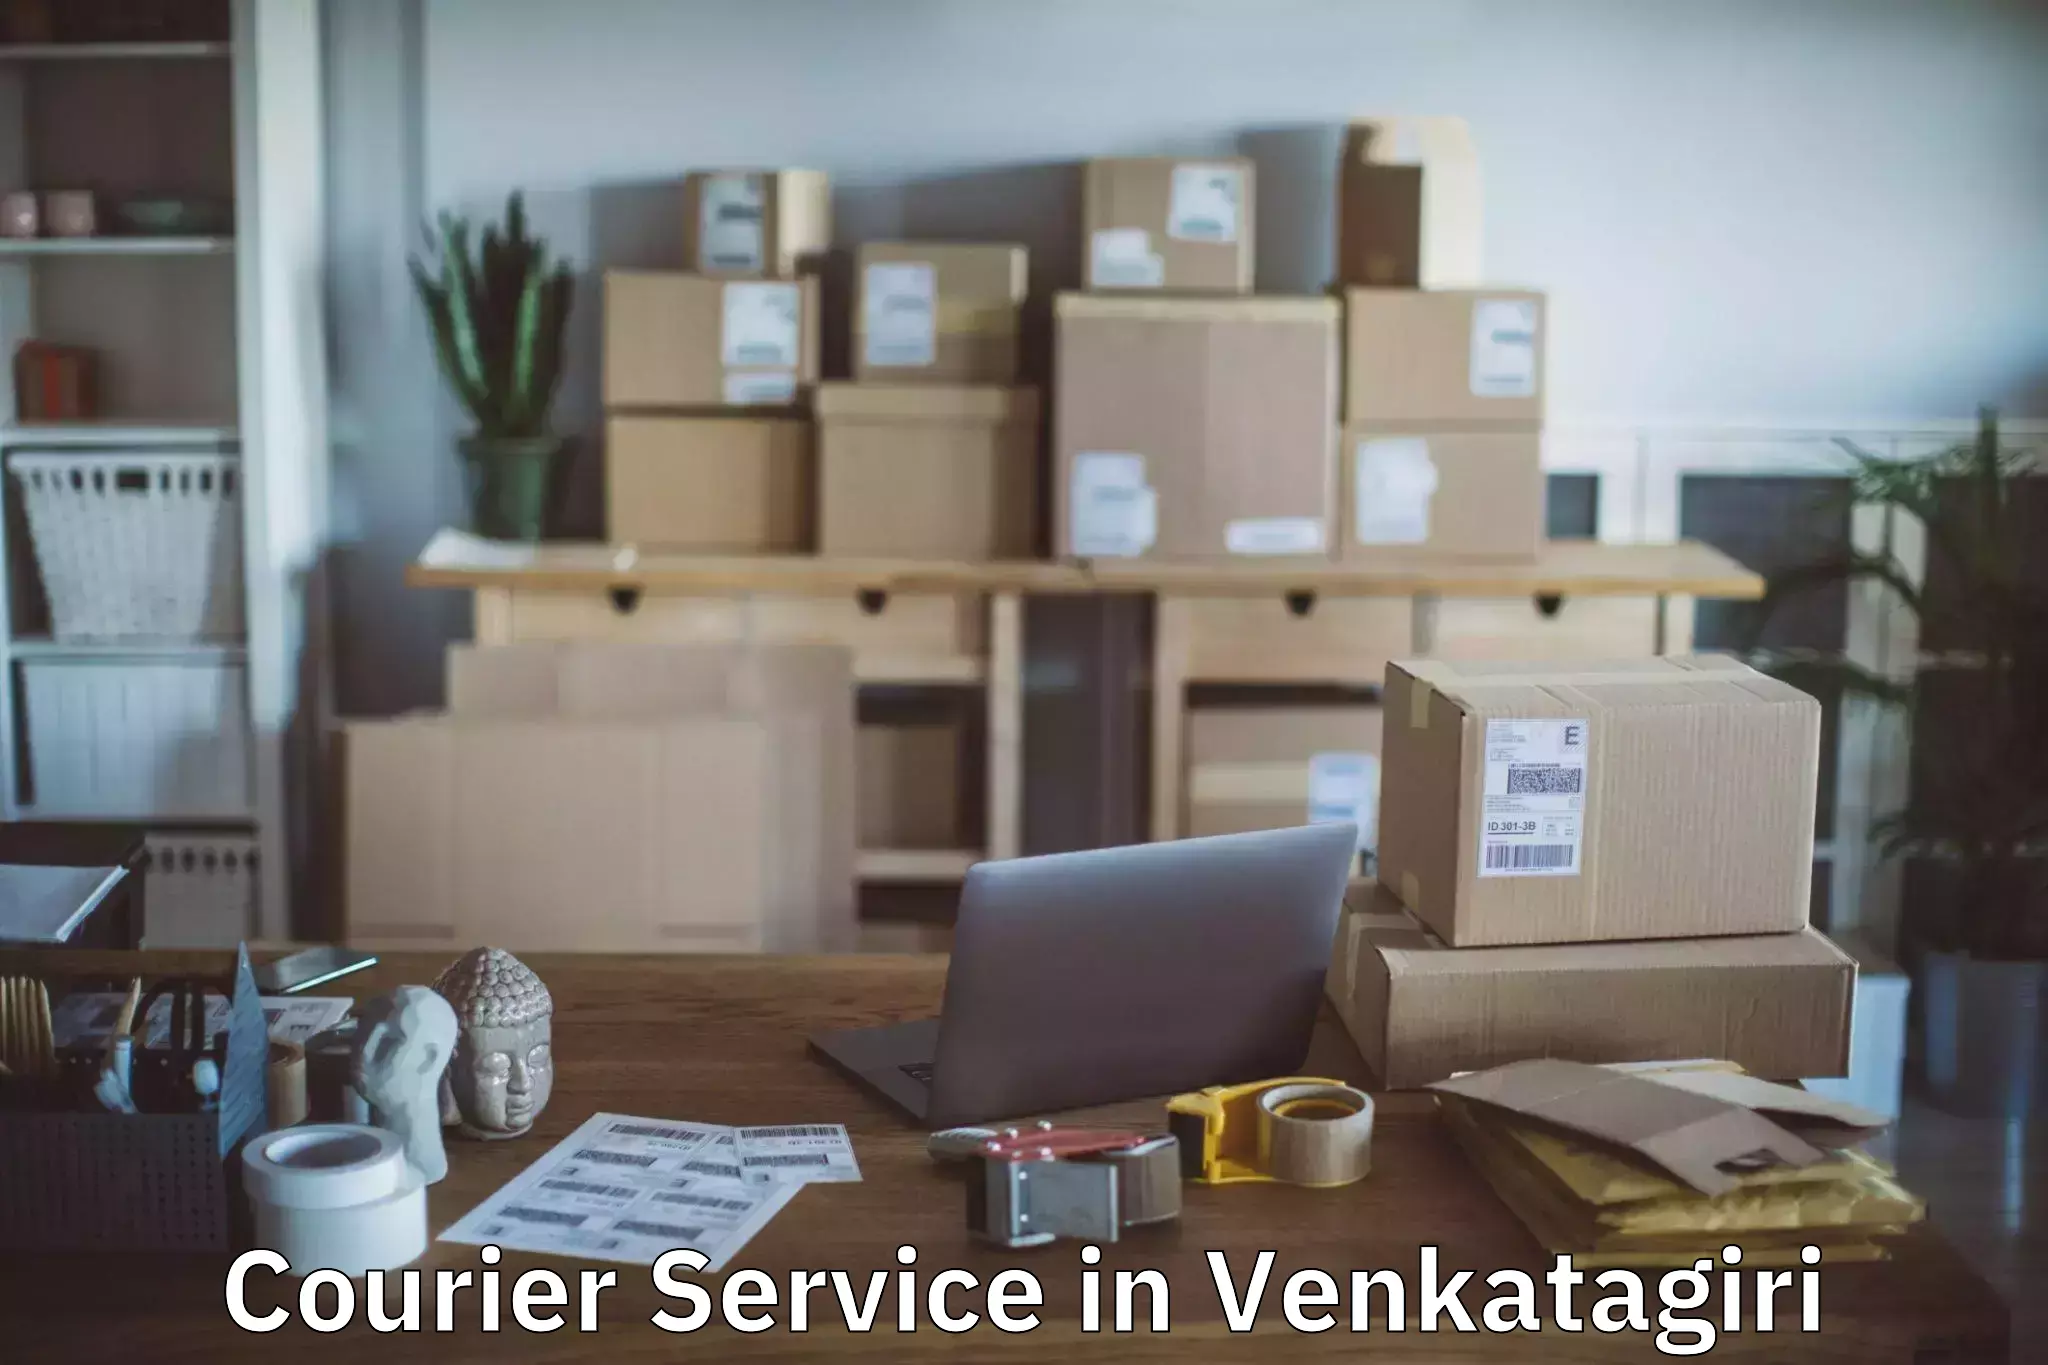 Sustainable shipping practices in Venkatagiri